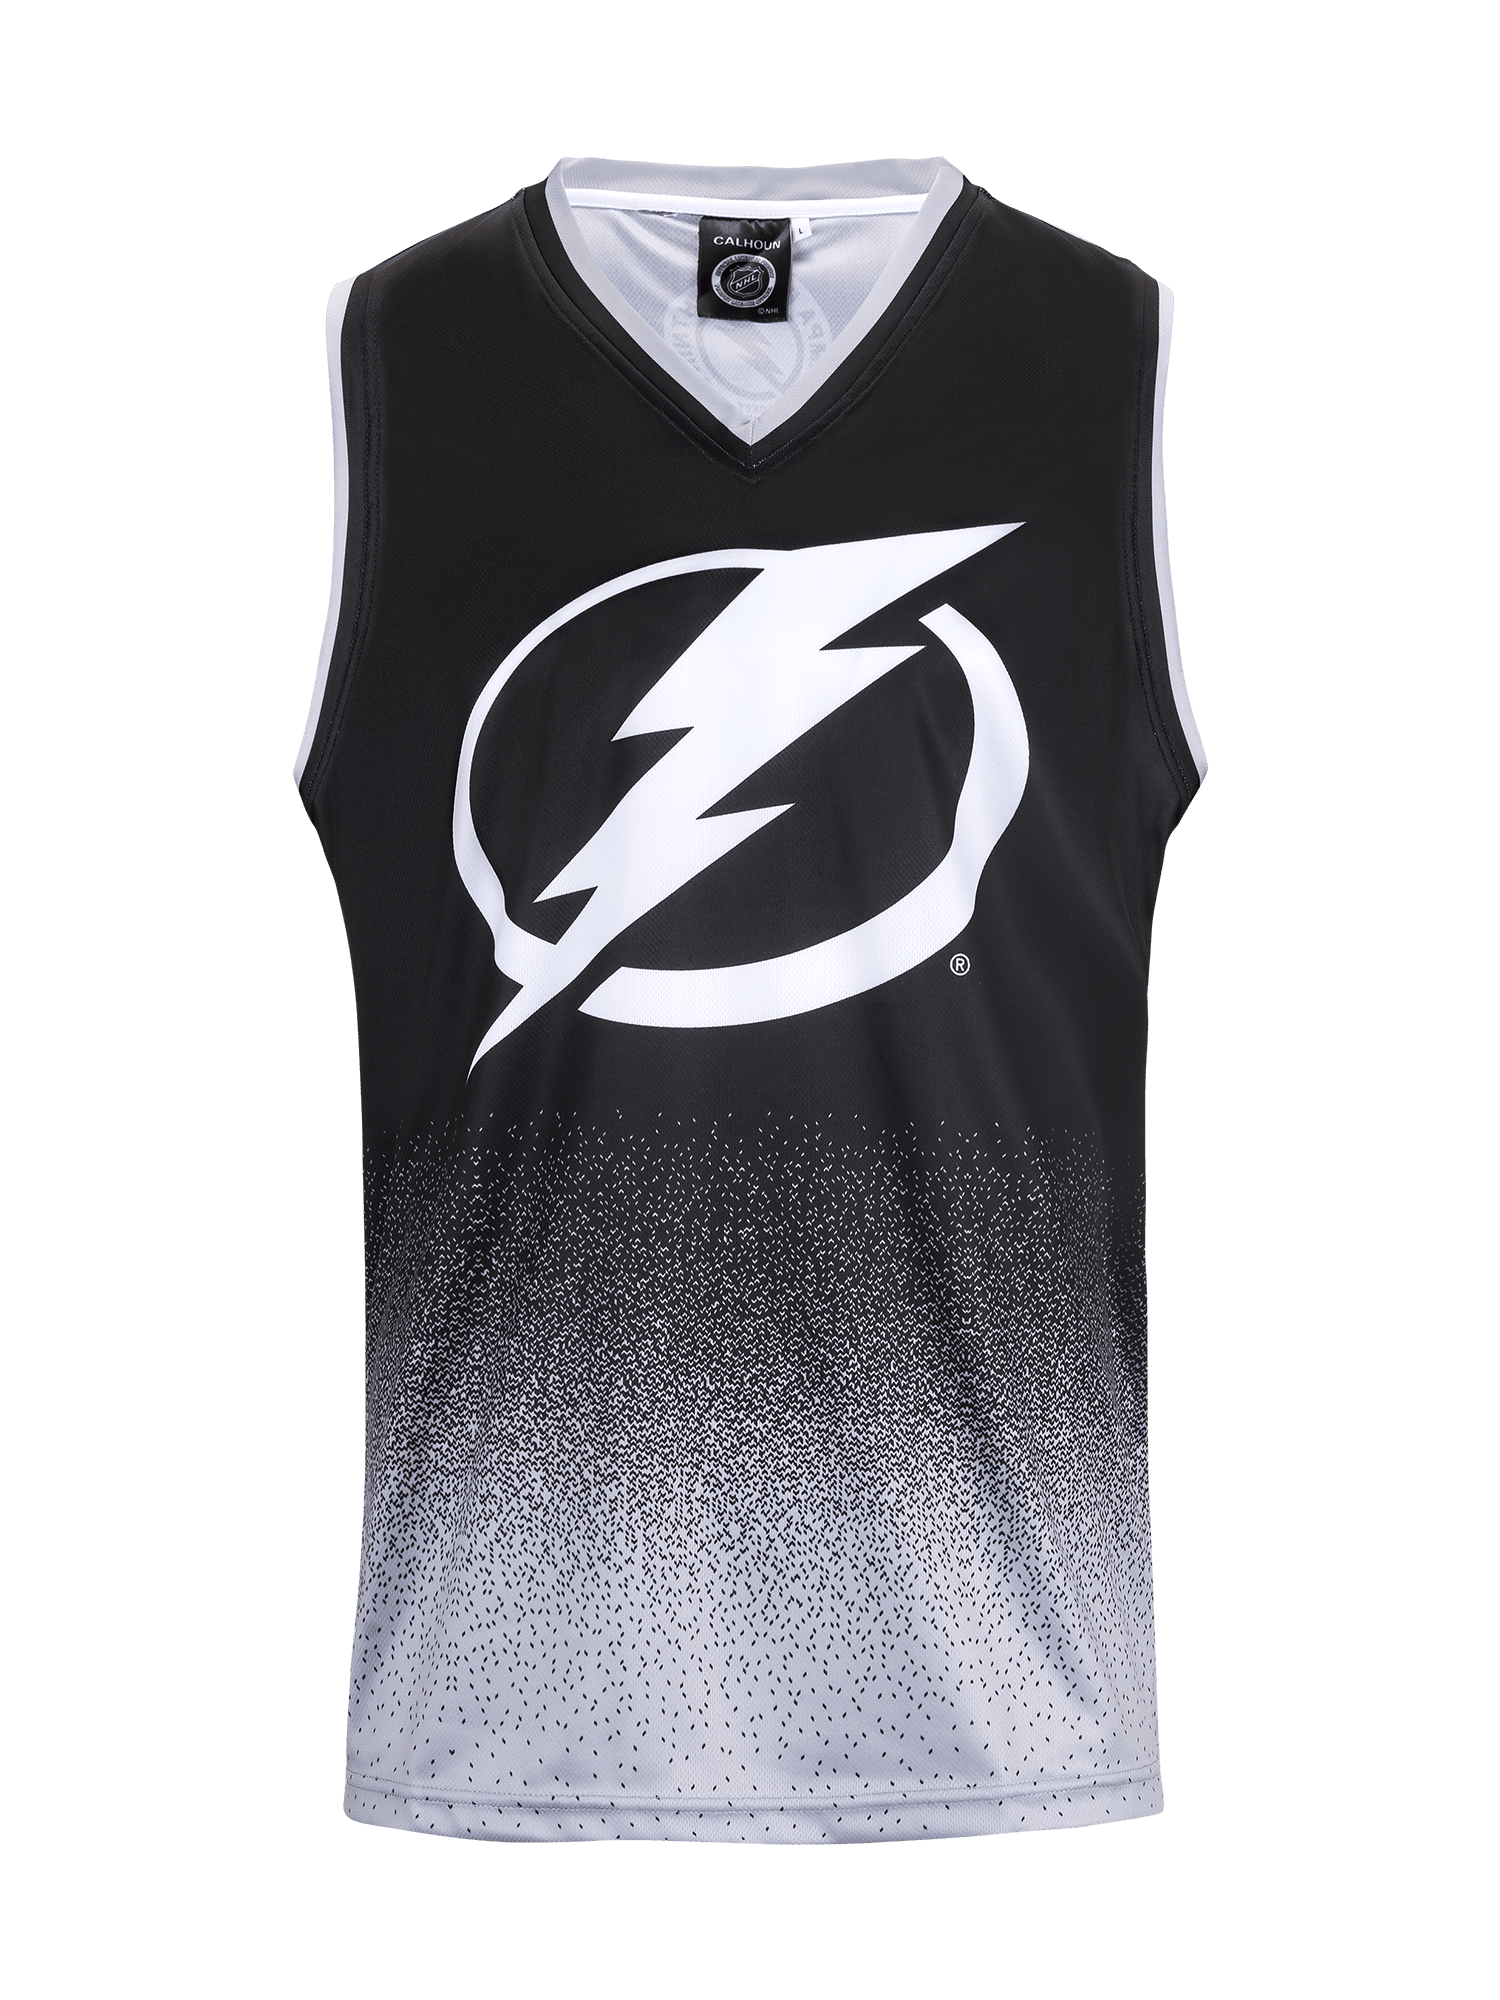 Review: The Tampa Bay Lightning's new black alternate jerseys